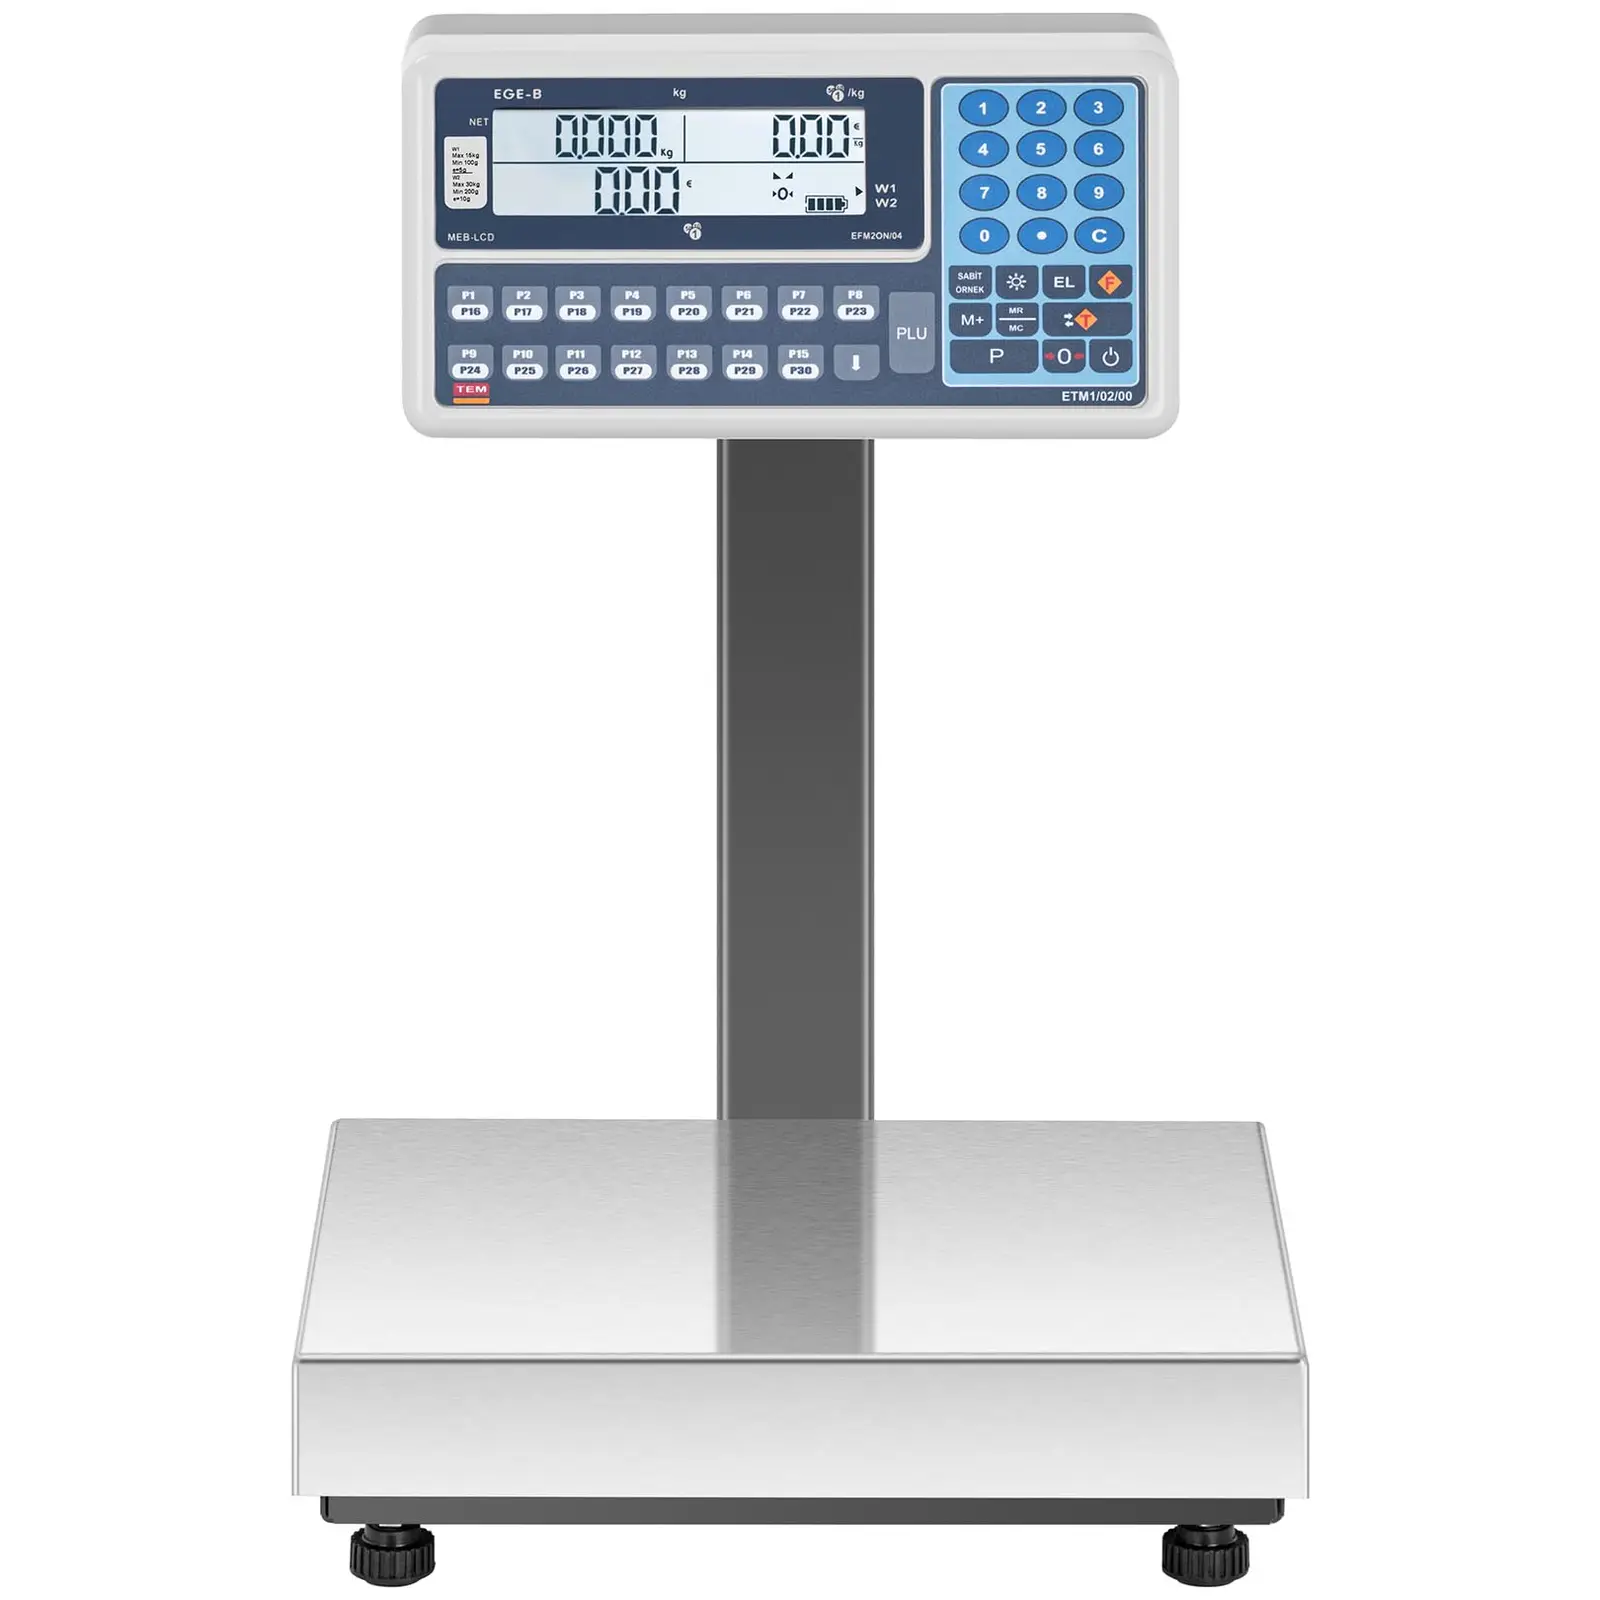 Outlet Waga sklepowa - 15 kg (5 g) / 30 kg (10 g) - LCD - legalizacja